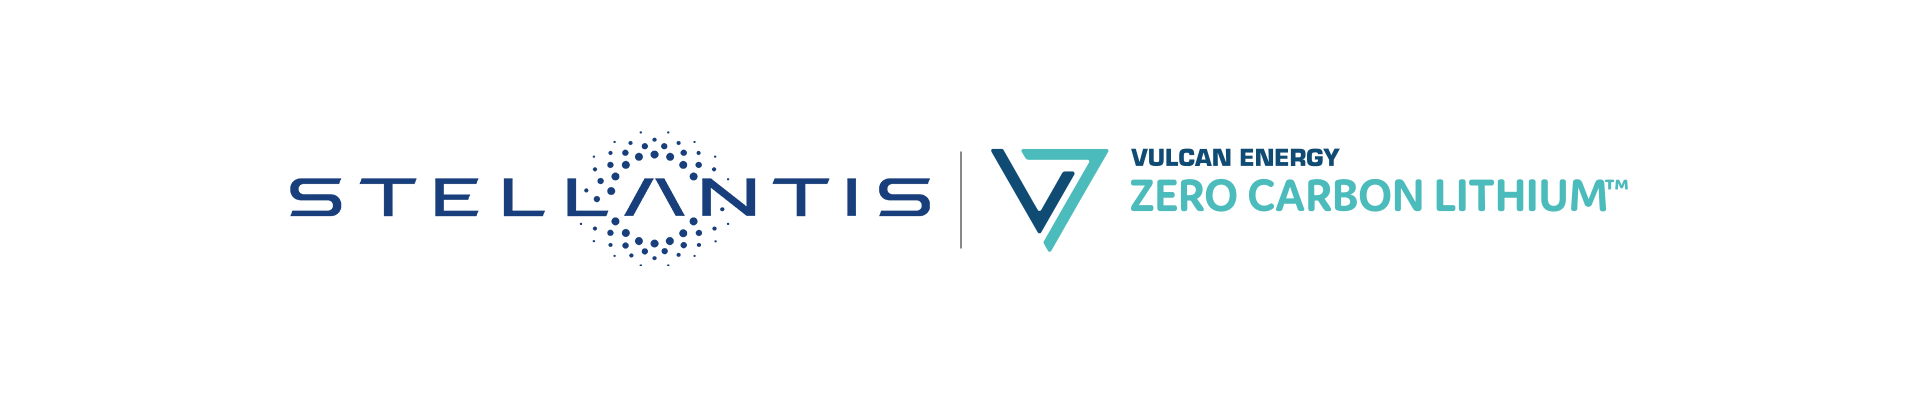 Image of Stellantis and vulcan logo